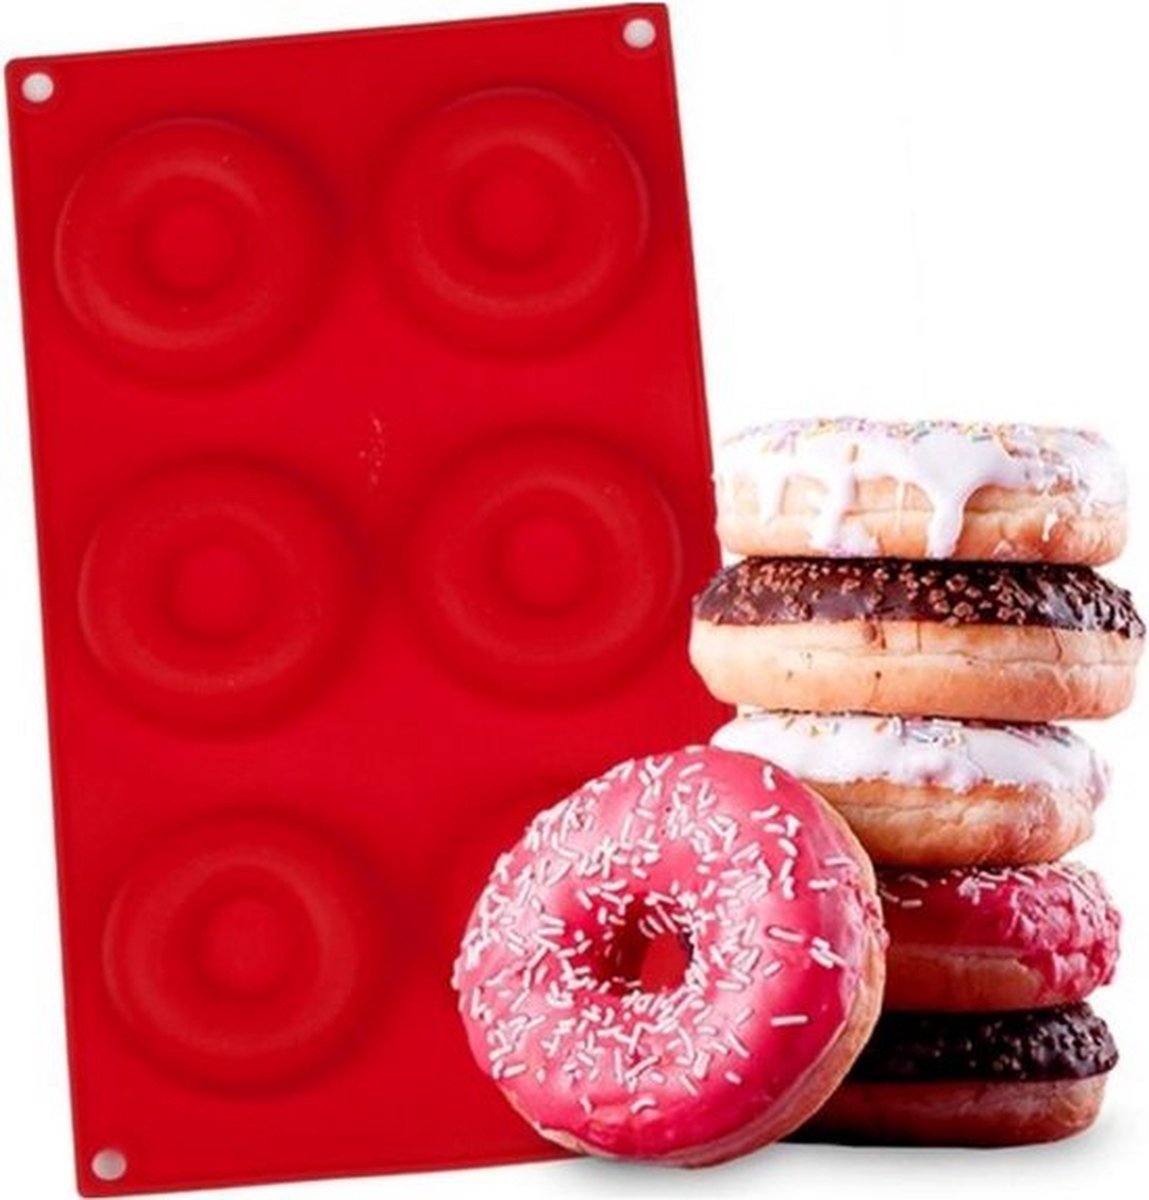 CHPN - Donutvorm - Donutmal - Donut - Donut maker - Siliconen Bakvorm - voor 6 Donuts - Donutmaker Vorm/Mal - Donut mal